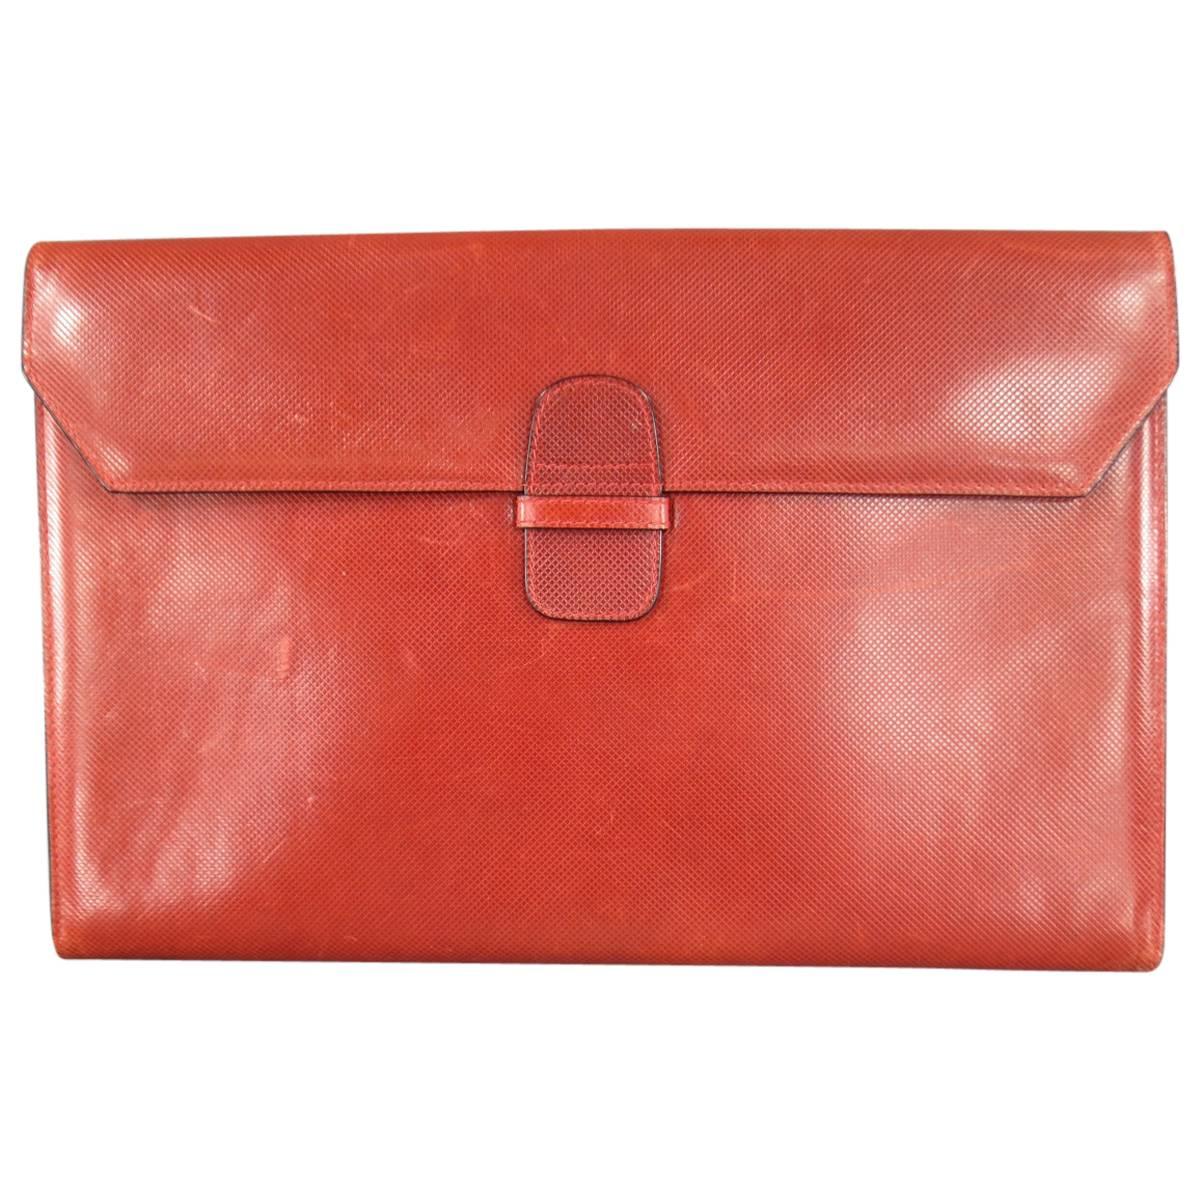 Vintage BOTTEGA VENETA Rust Red Textured Leather Clutch Portfolio